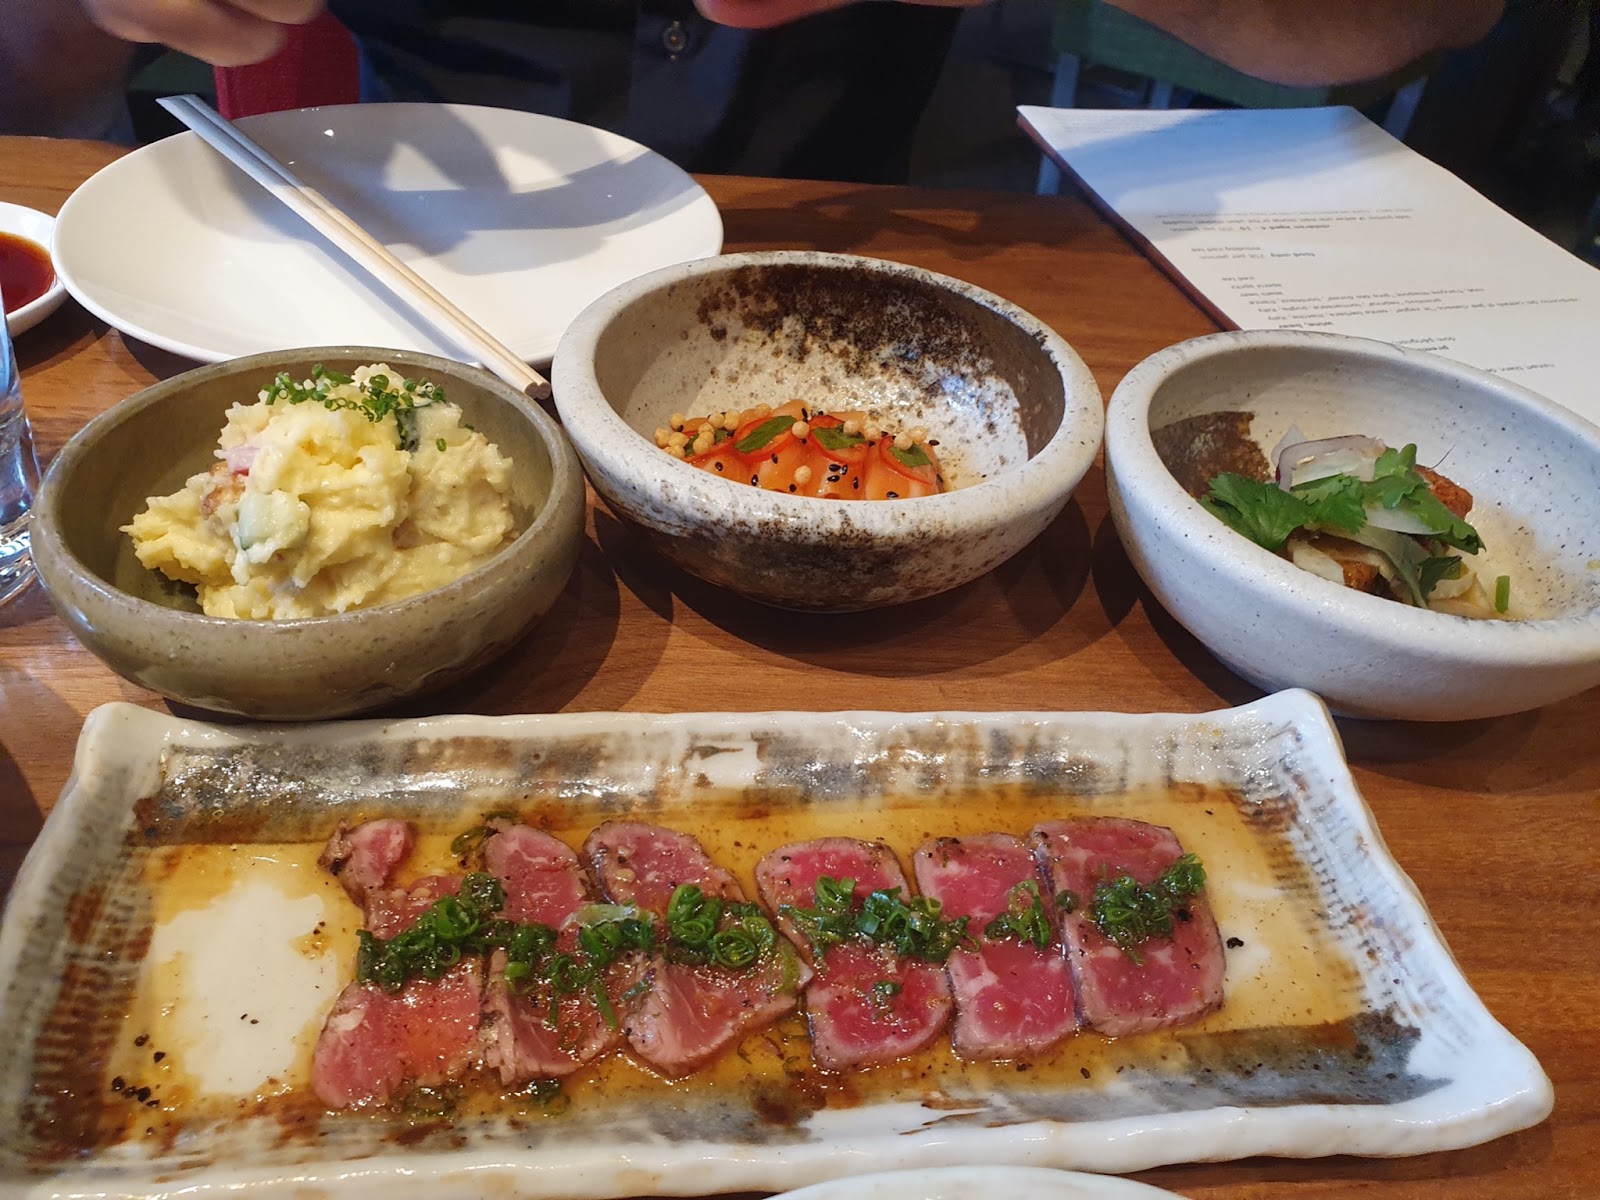 Zuma beef tataki, fried tofu, salmon bites, and Japanese mashed potatoes